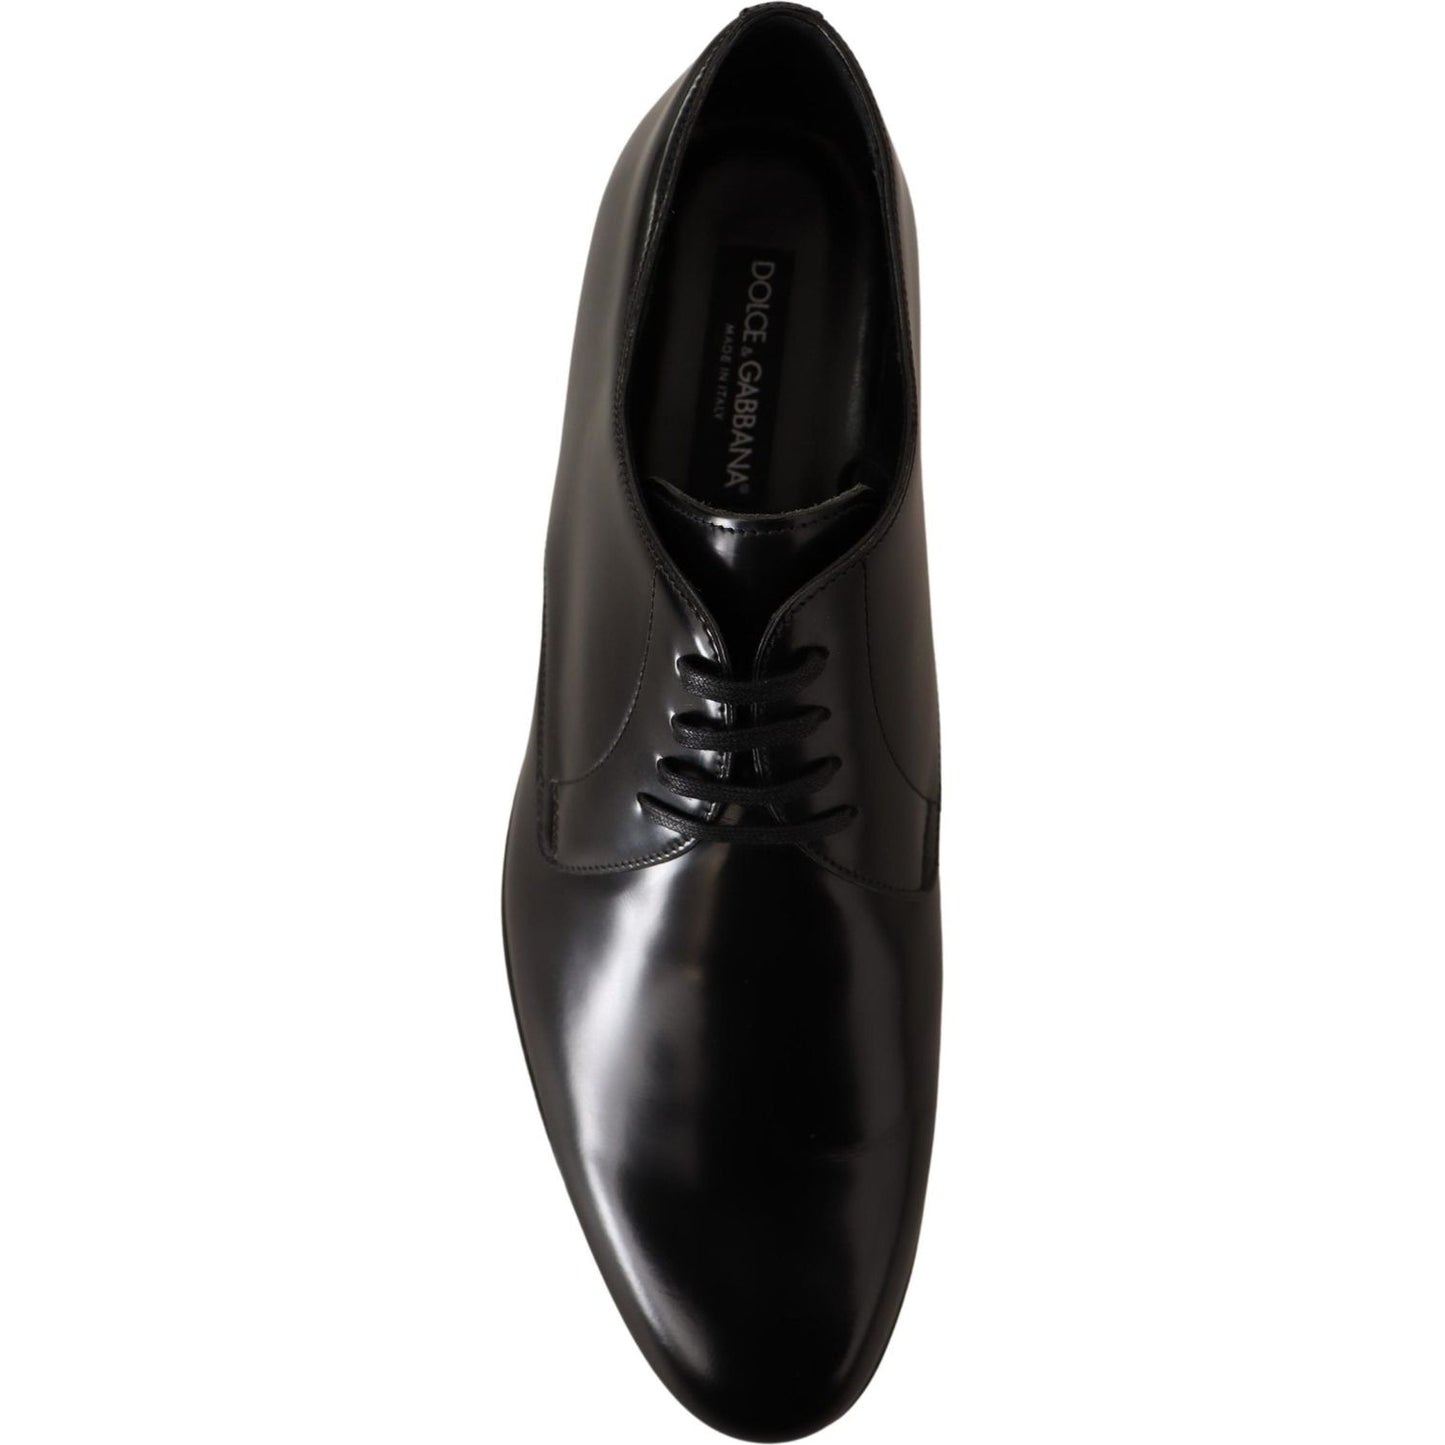 Dolce & Gabbana Elegant Black Leather Derby Shoes black-leather-lace-up-men-dress-derby-shoes-2 Dress Shoes IMG_3709-scaled-08ca1e19-eb8.jpg